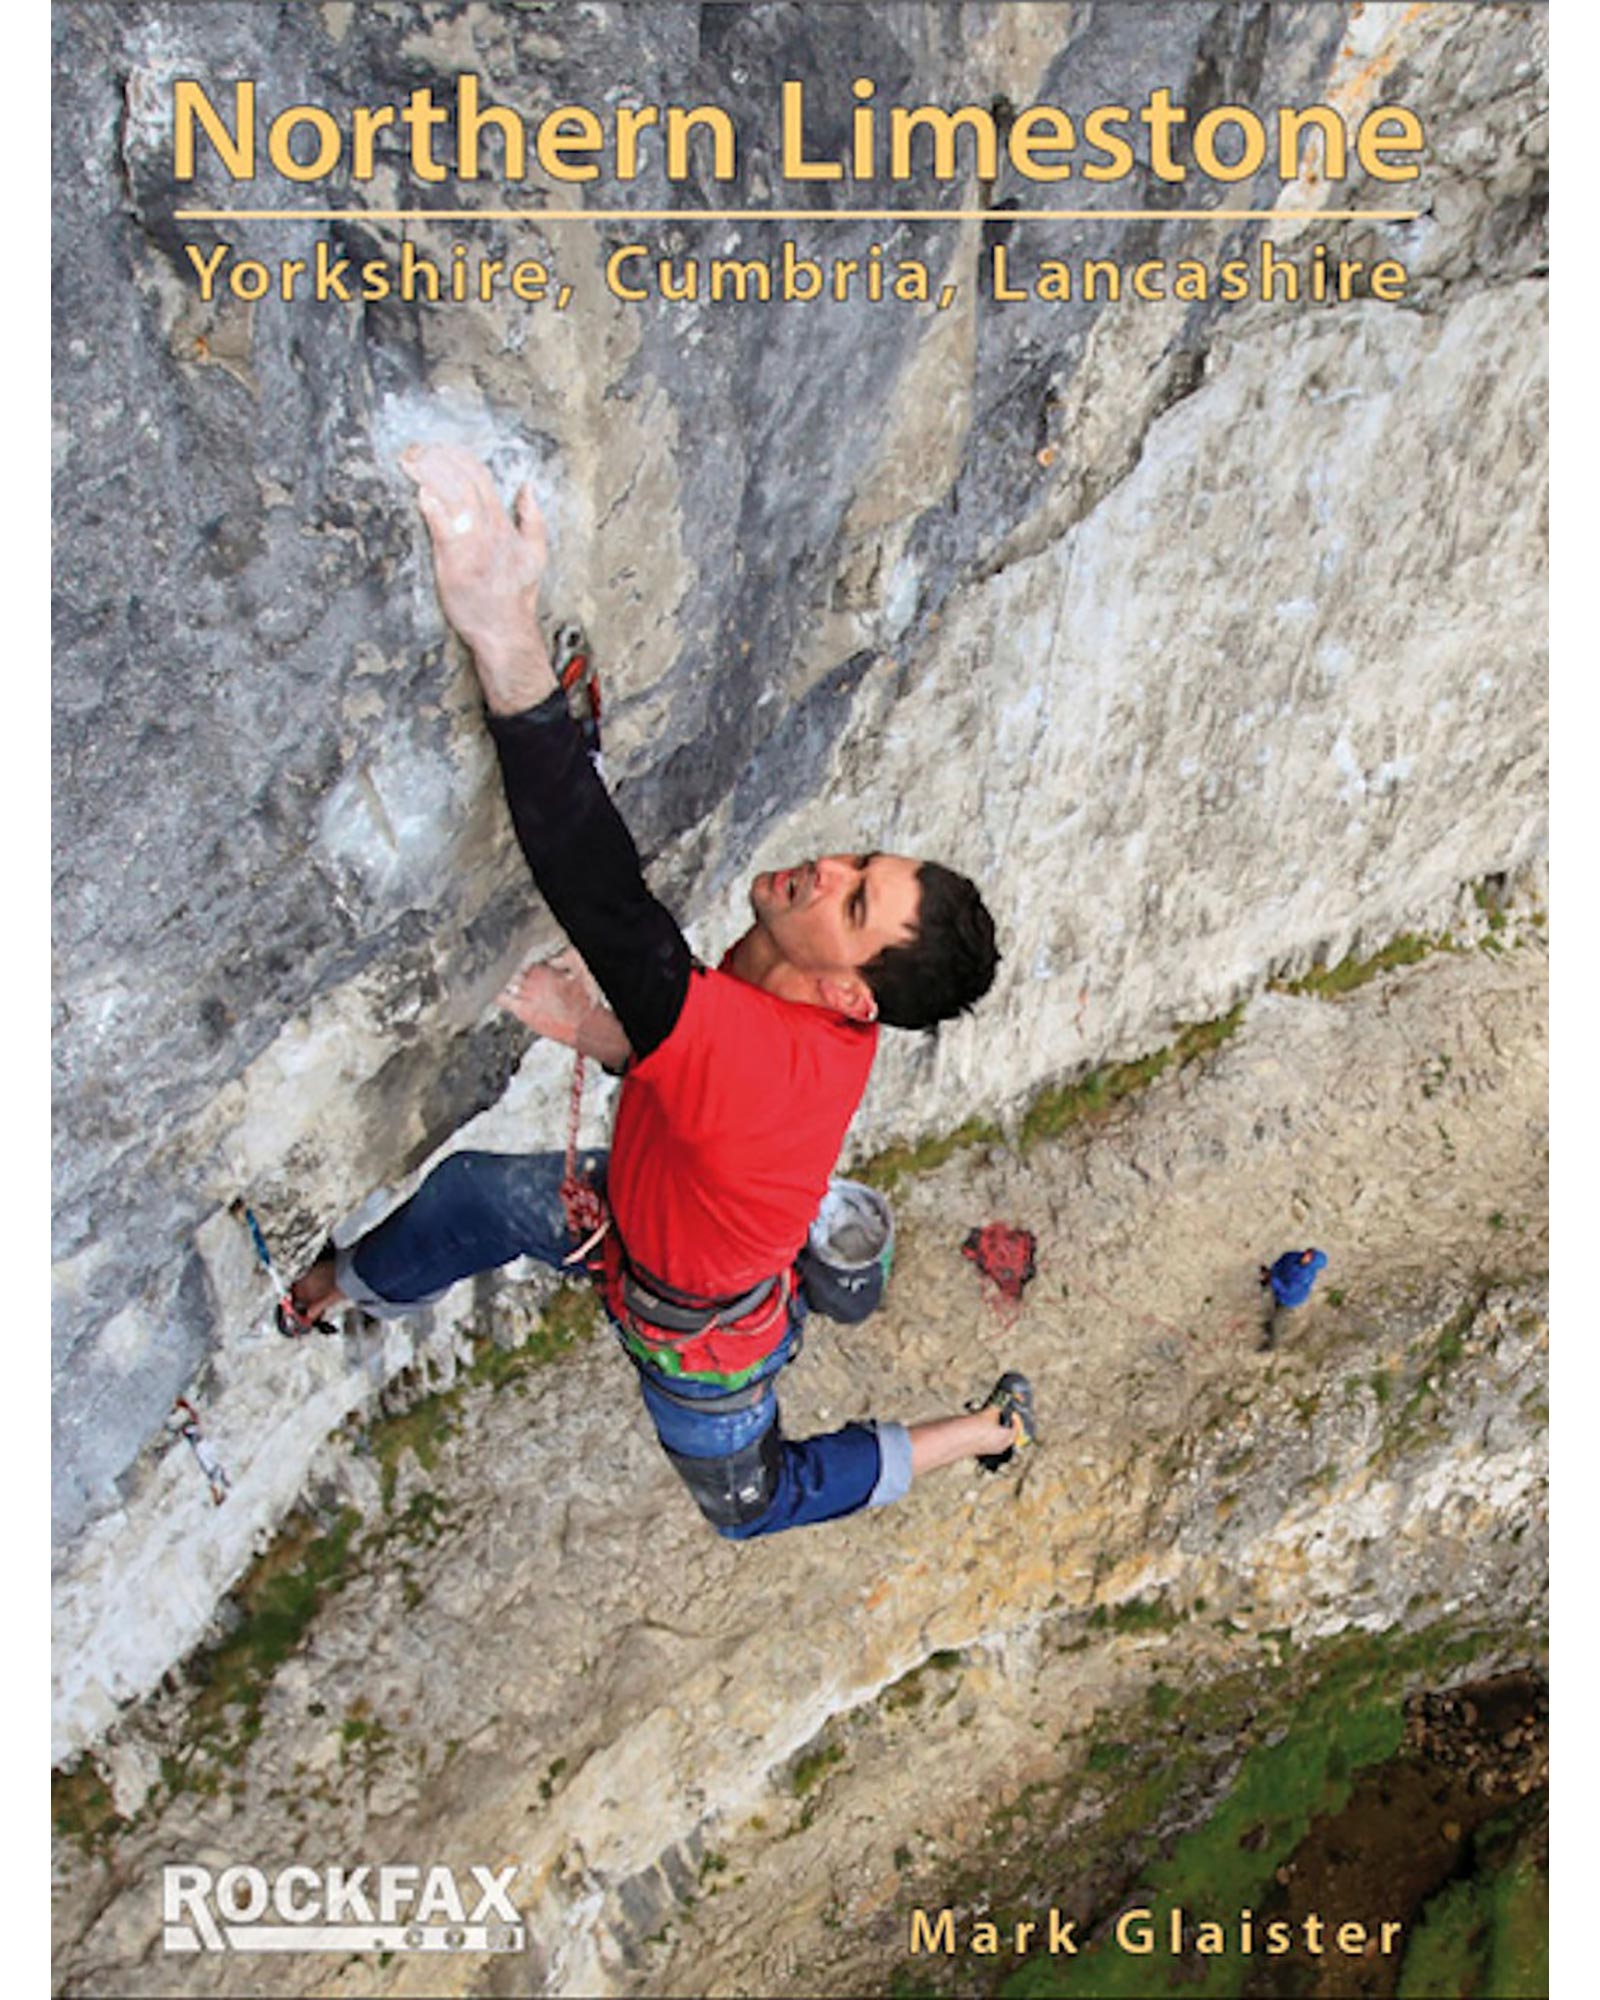 Rockfax Northern Limestone Rockfax Guide Book